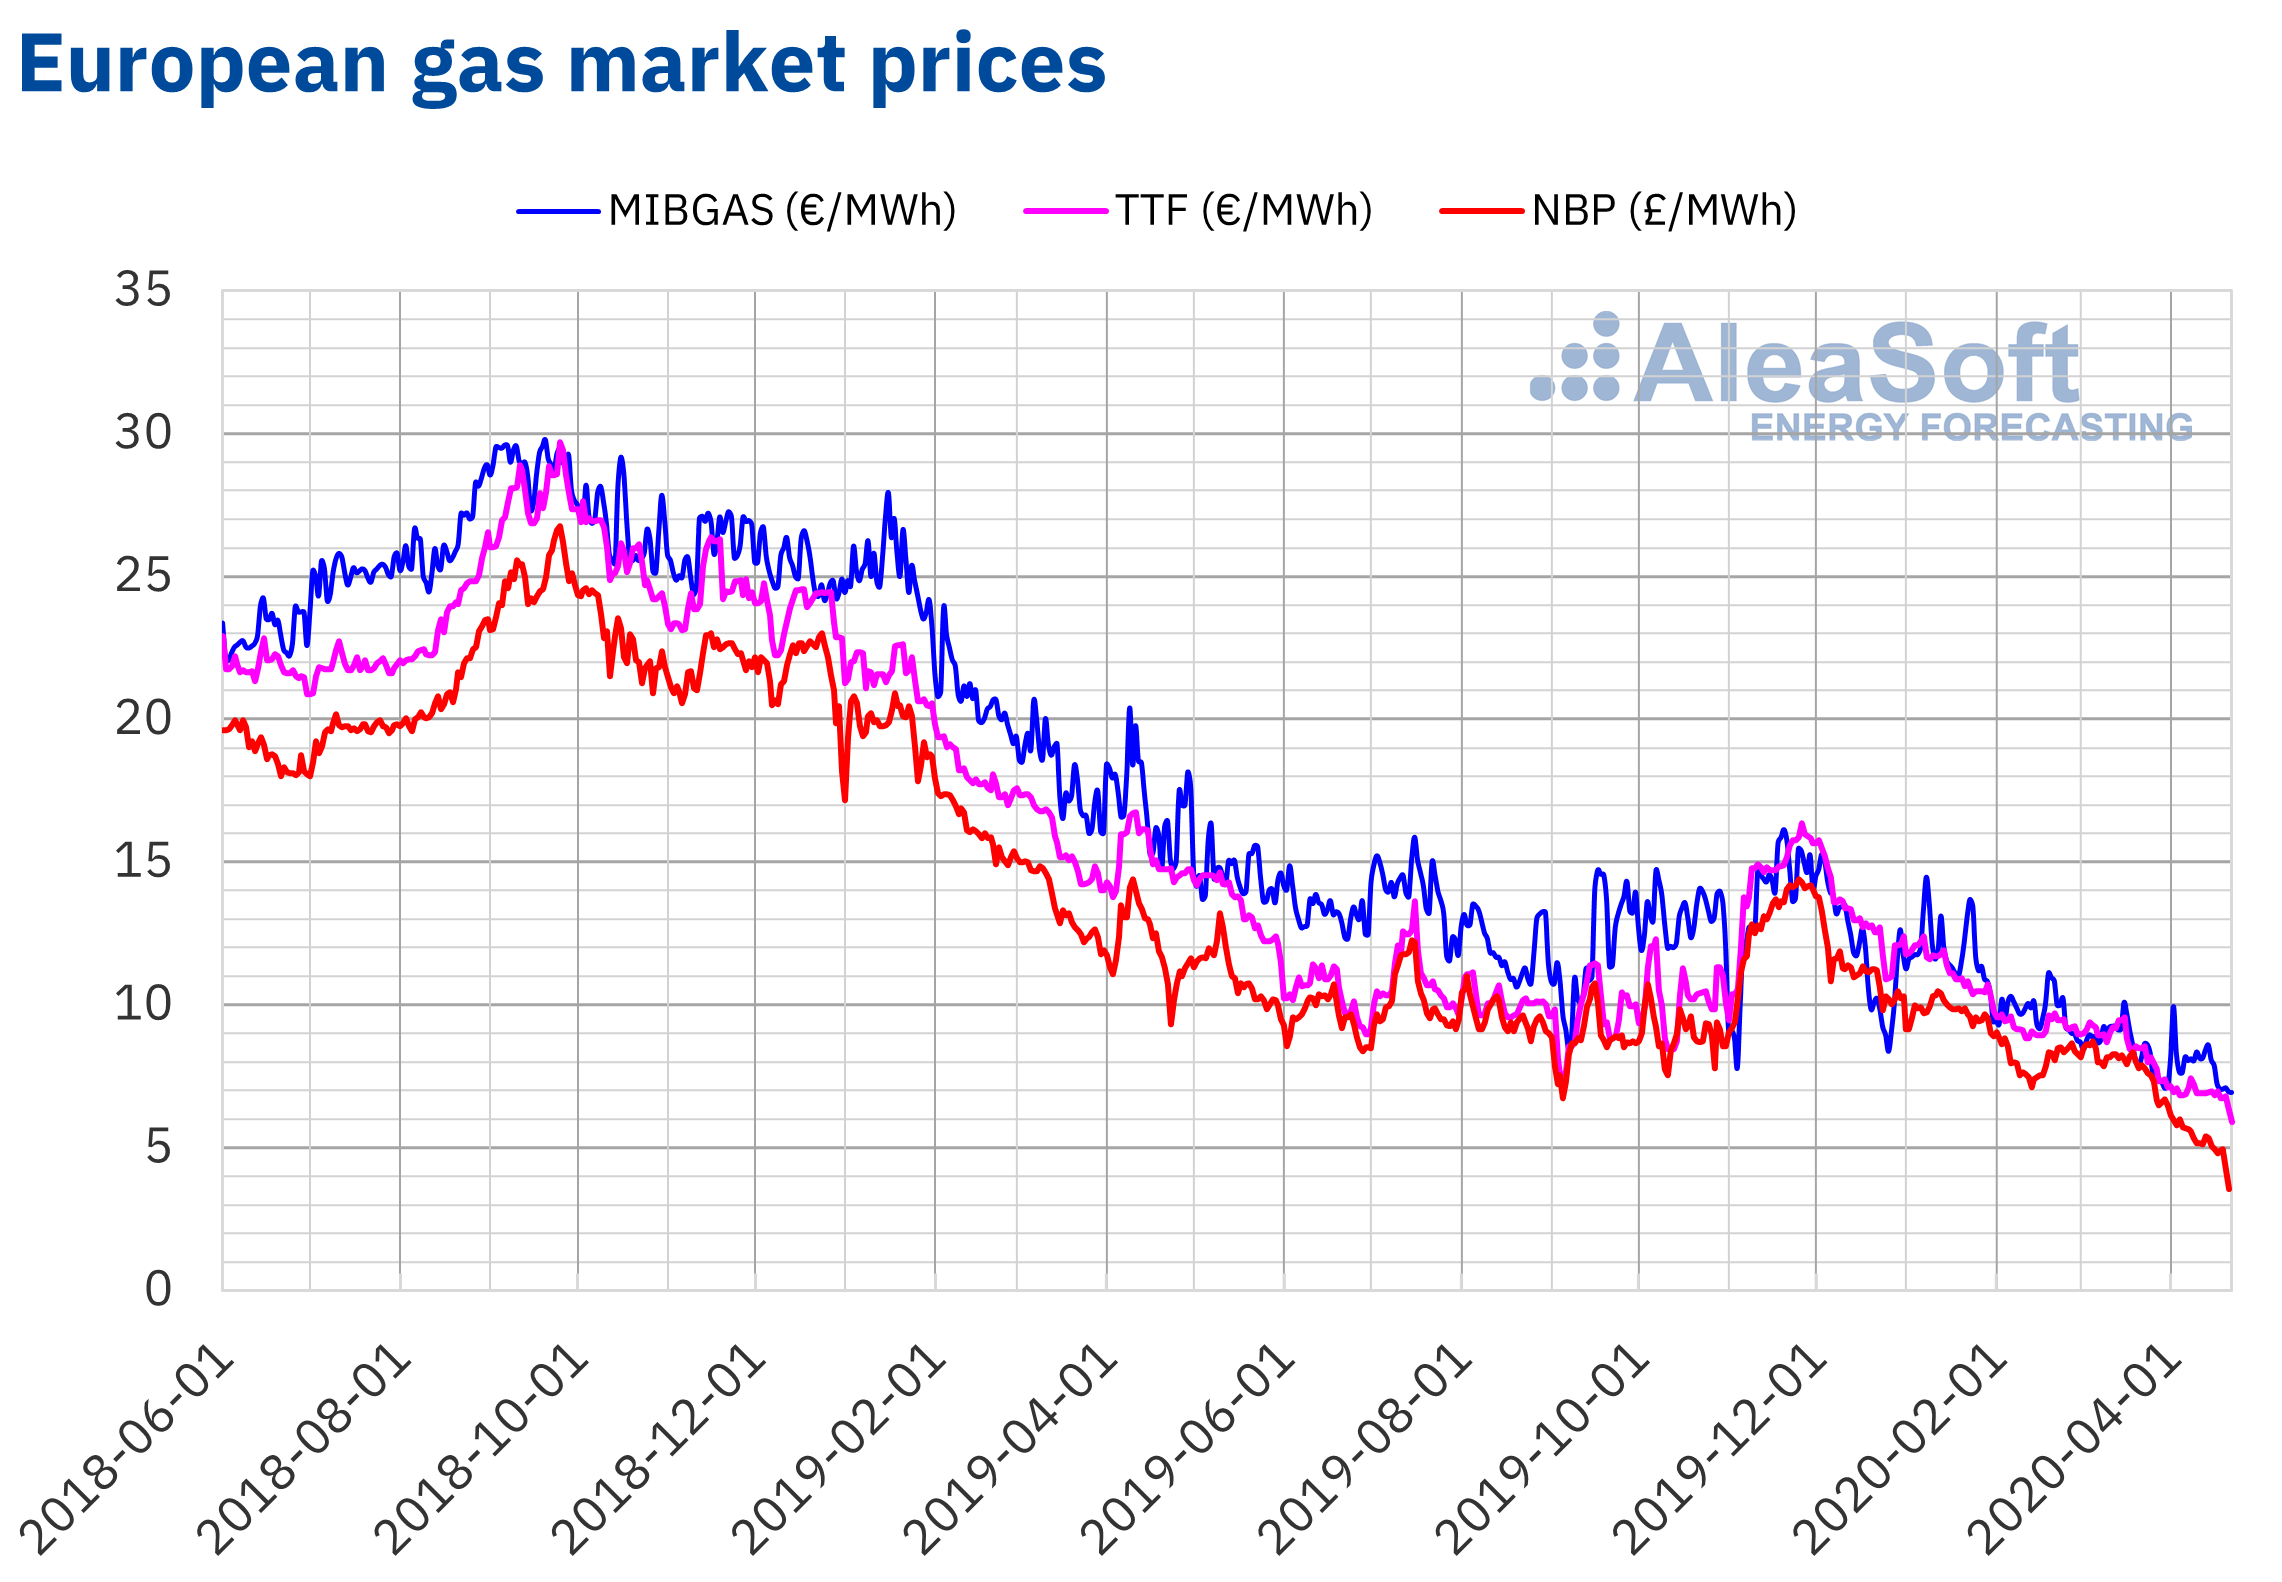 AleaSoft - Europe gas markets prices MIBGAS TTF NBP